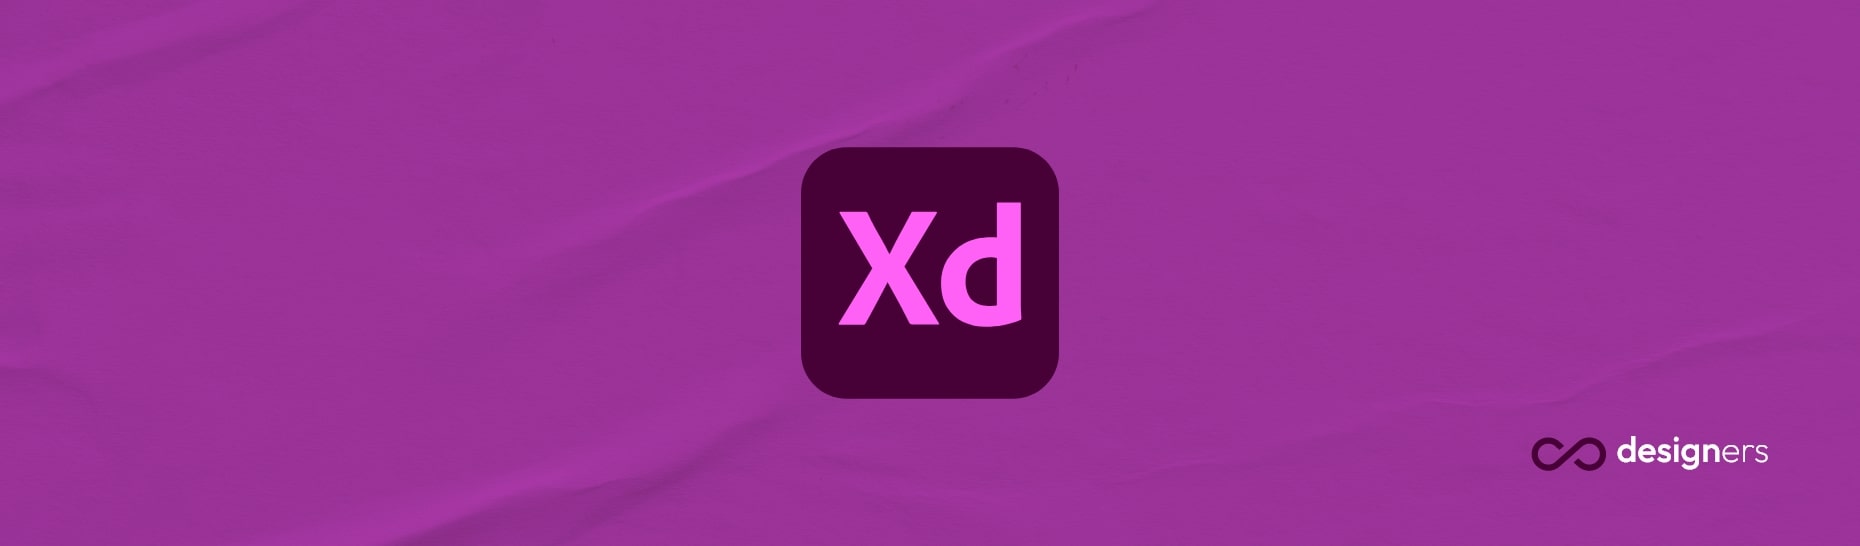 How do I do 3D design in Adobe XD?